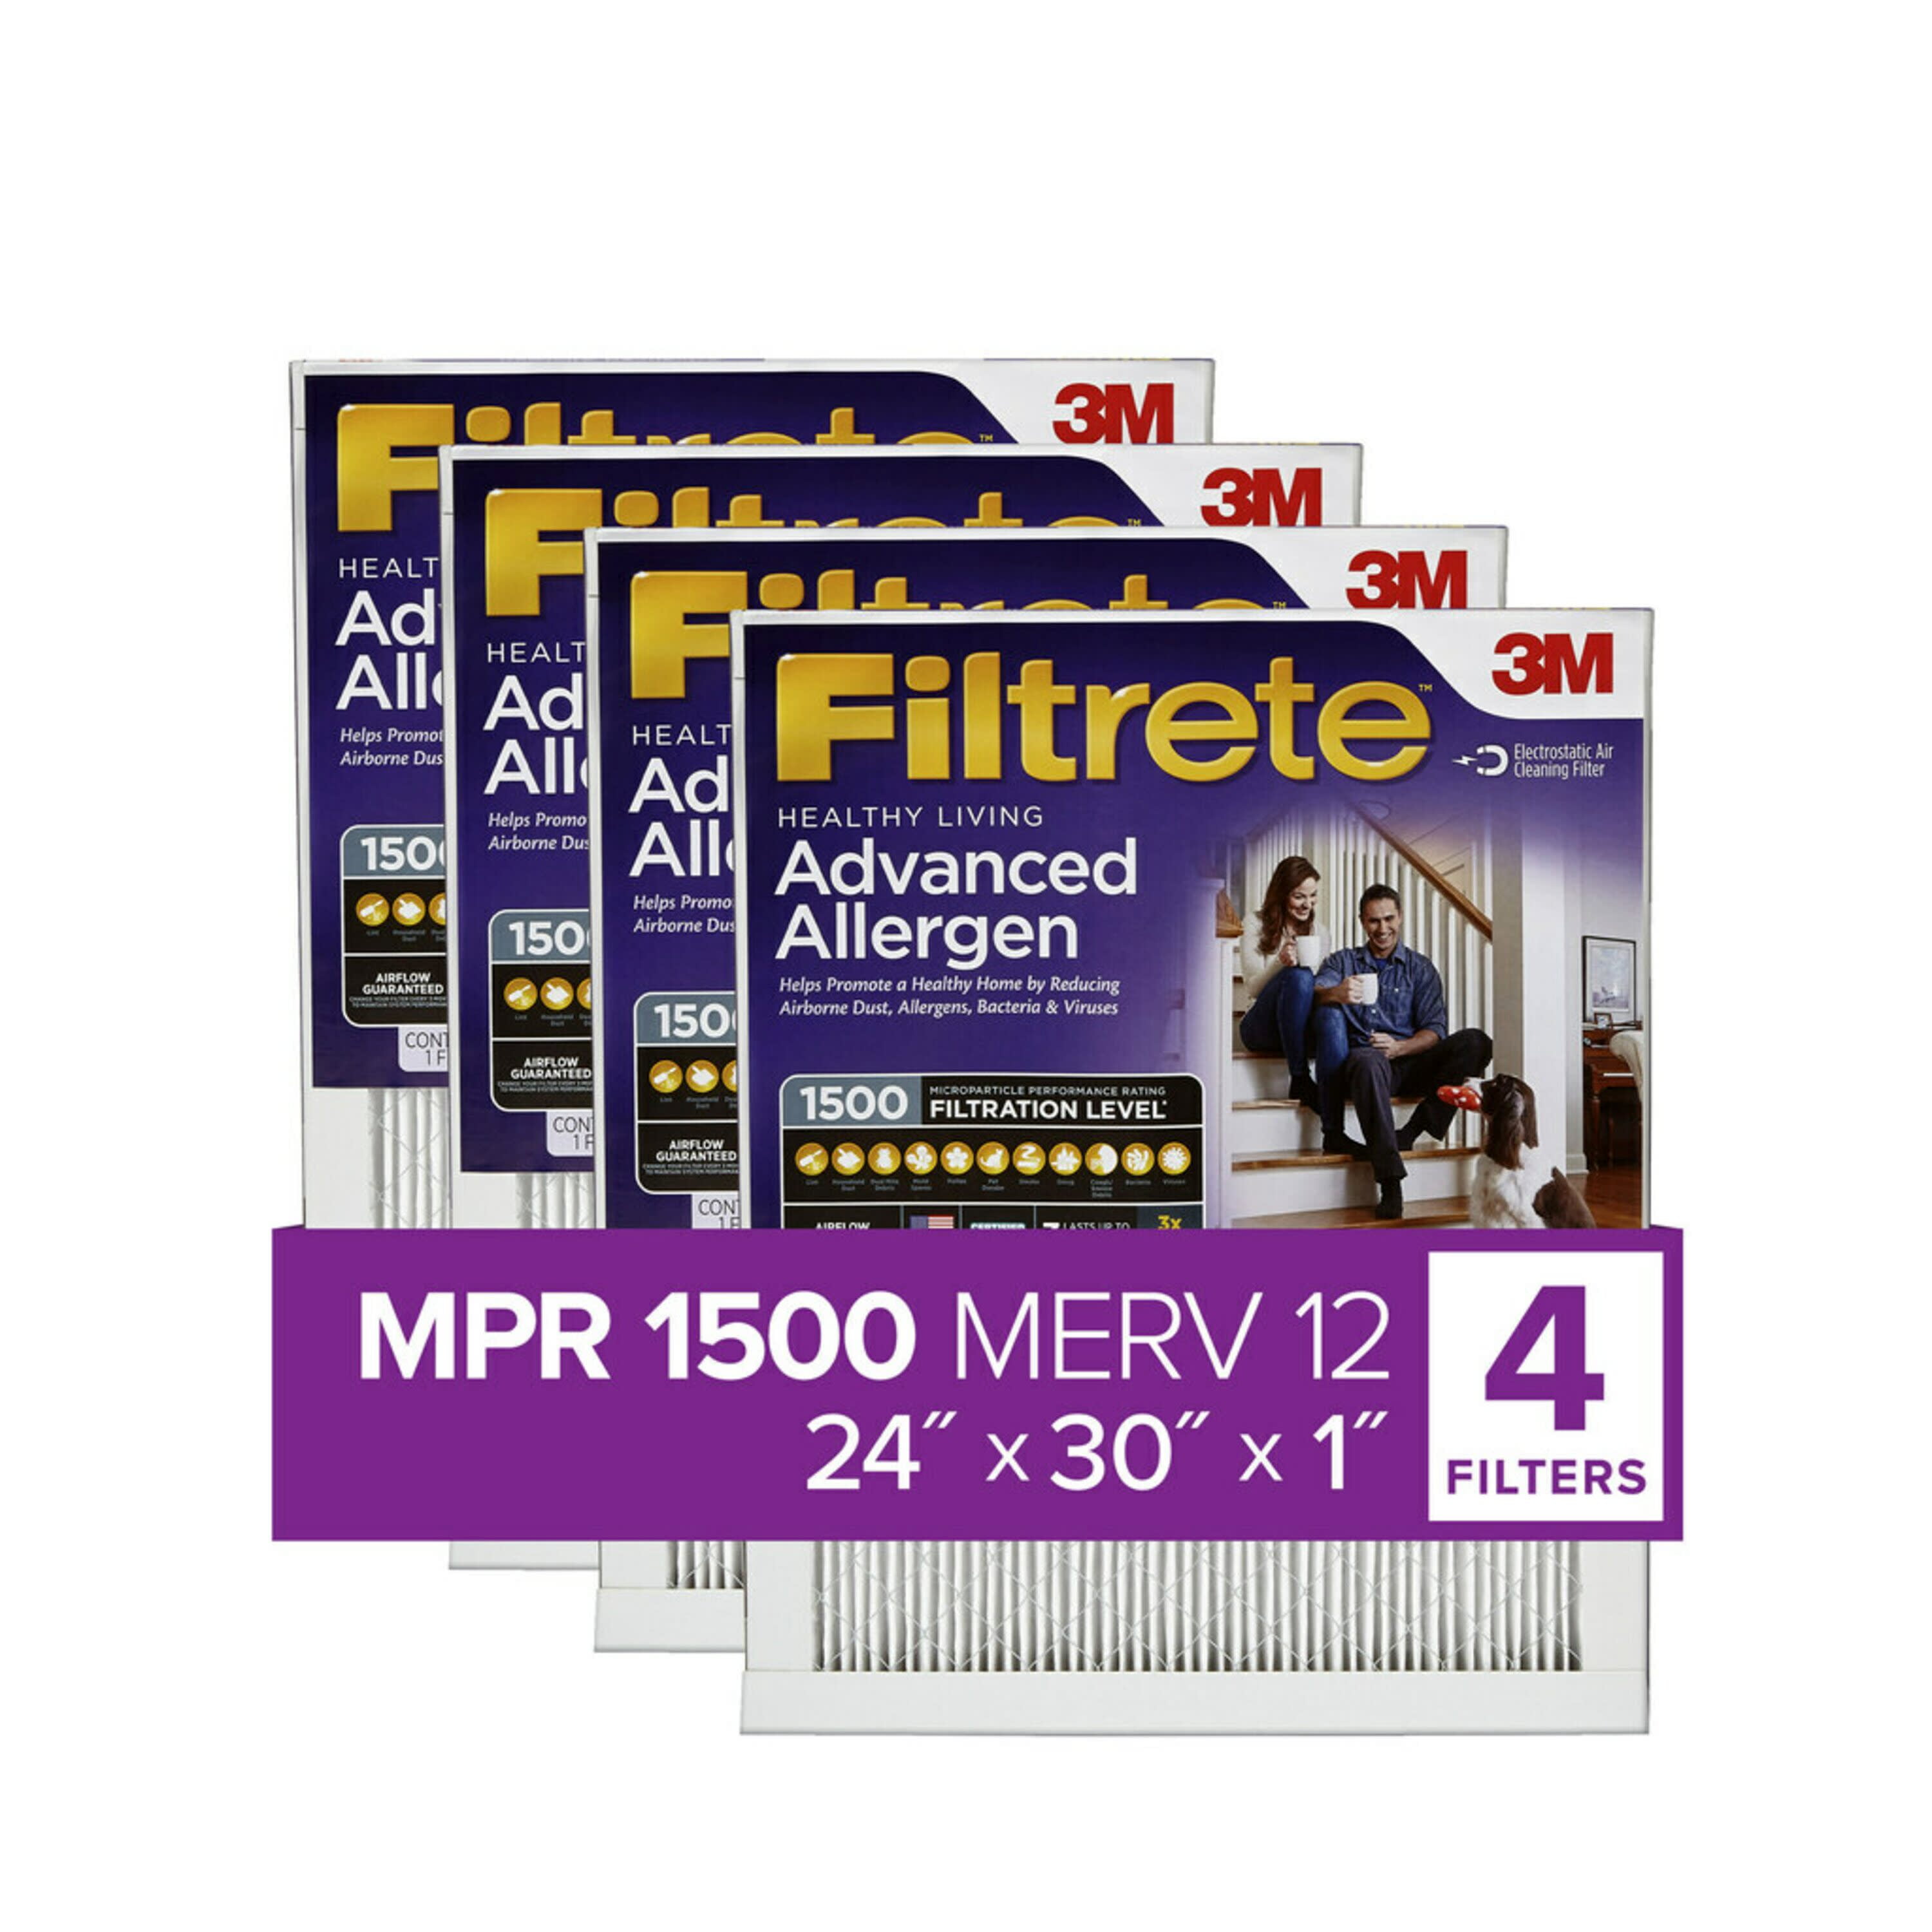 filtrete-24x30x1-healthy-living-advanced-allergen-reduction-hvac